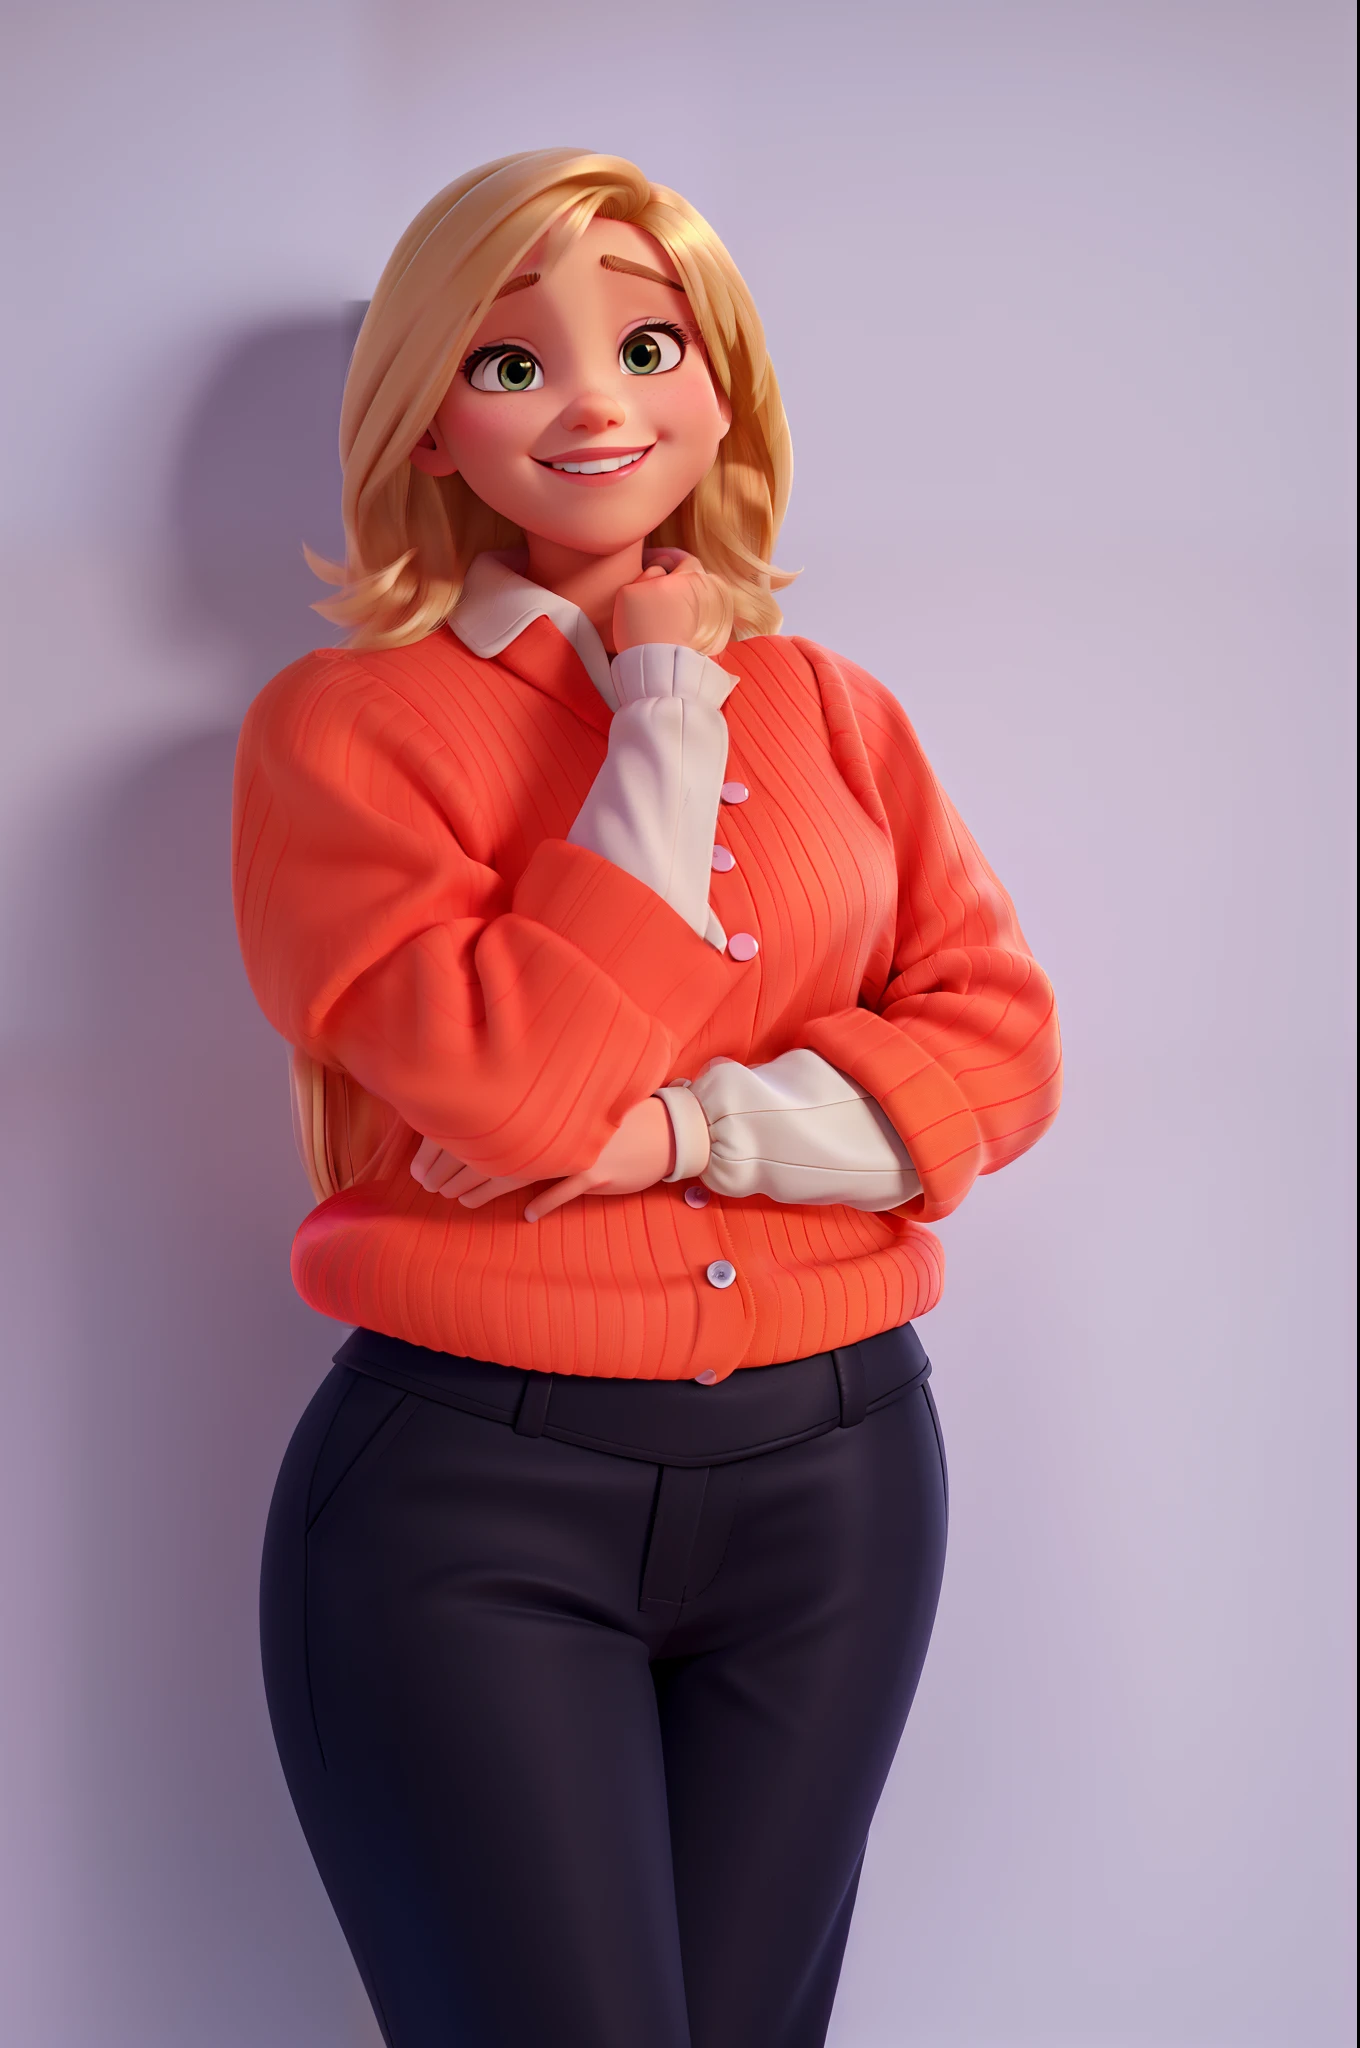 Light-skinned blonde woman smiling, short blonde hair, dark eyes, disney pixar style, high quality, high definition.